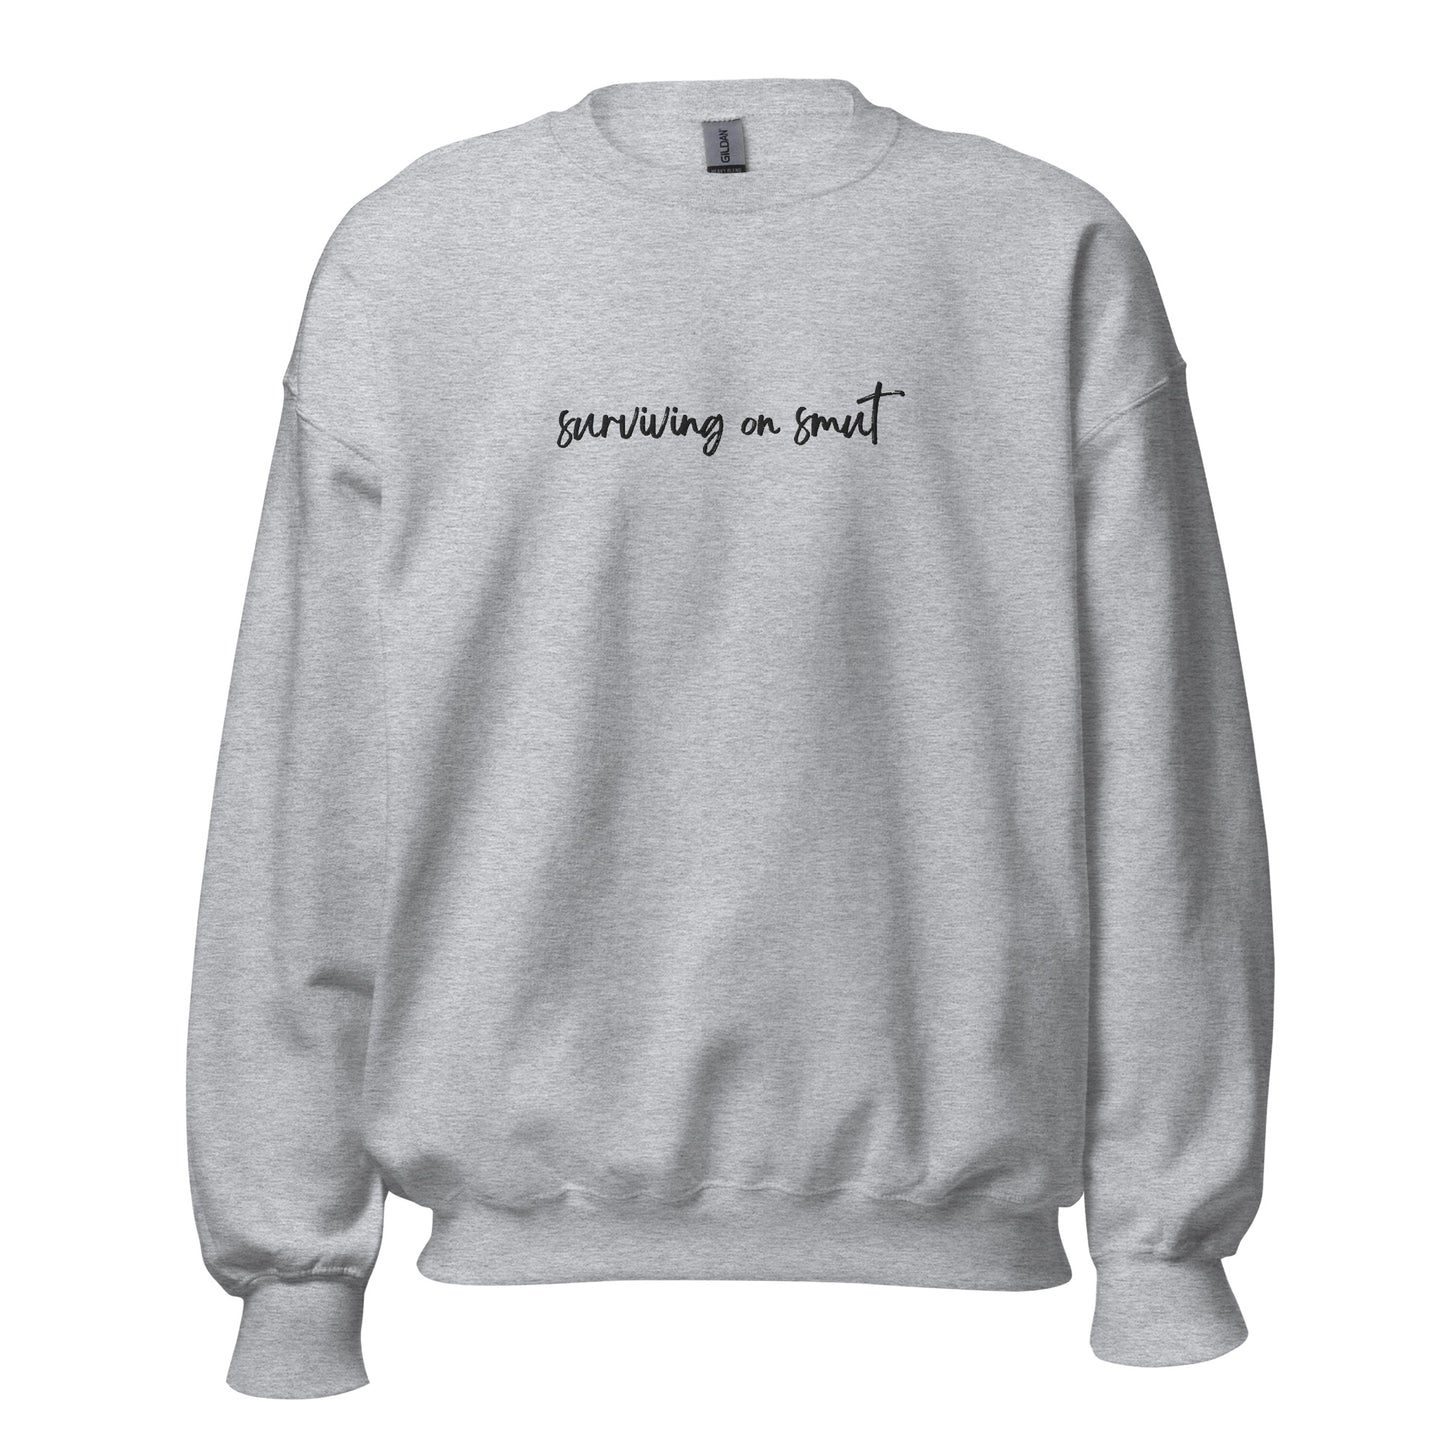 surviving on smut embroidered sweatshirt